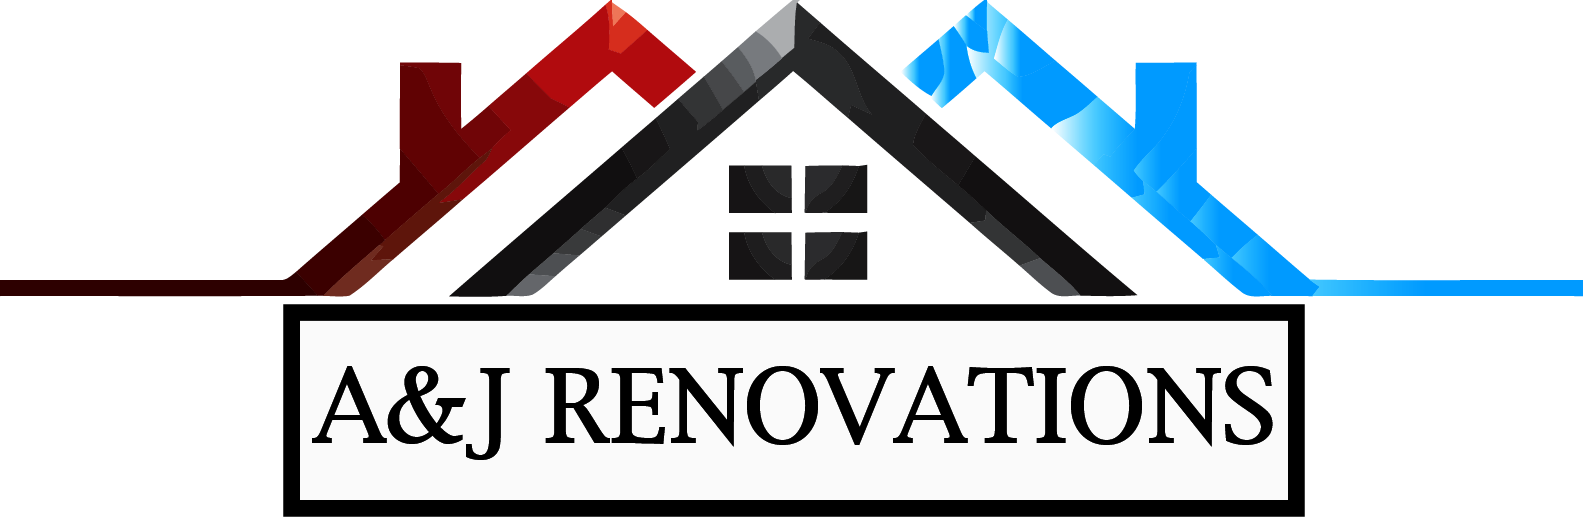 A J Renovations Logo PNG image